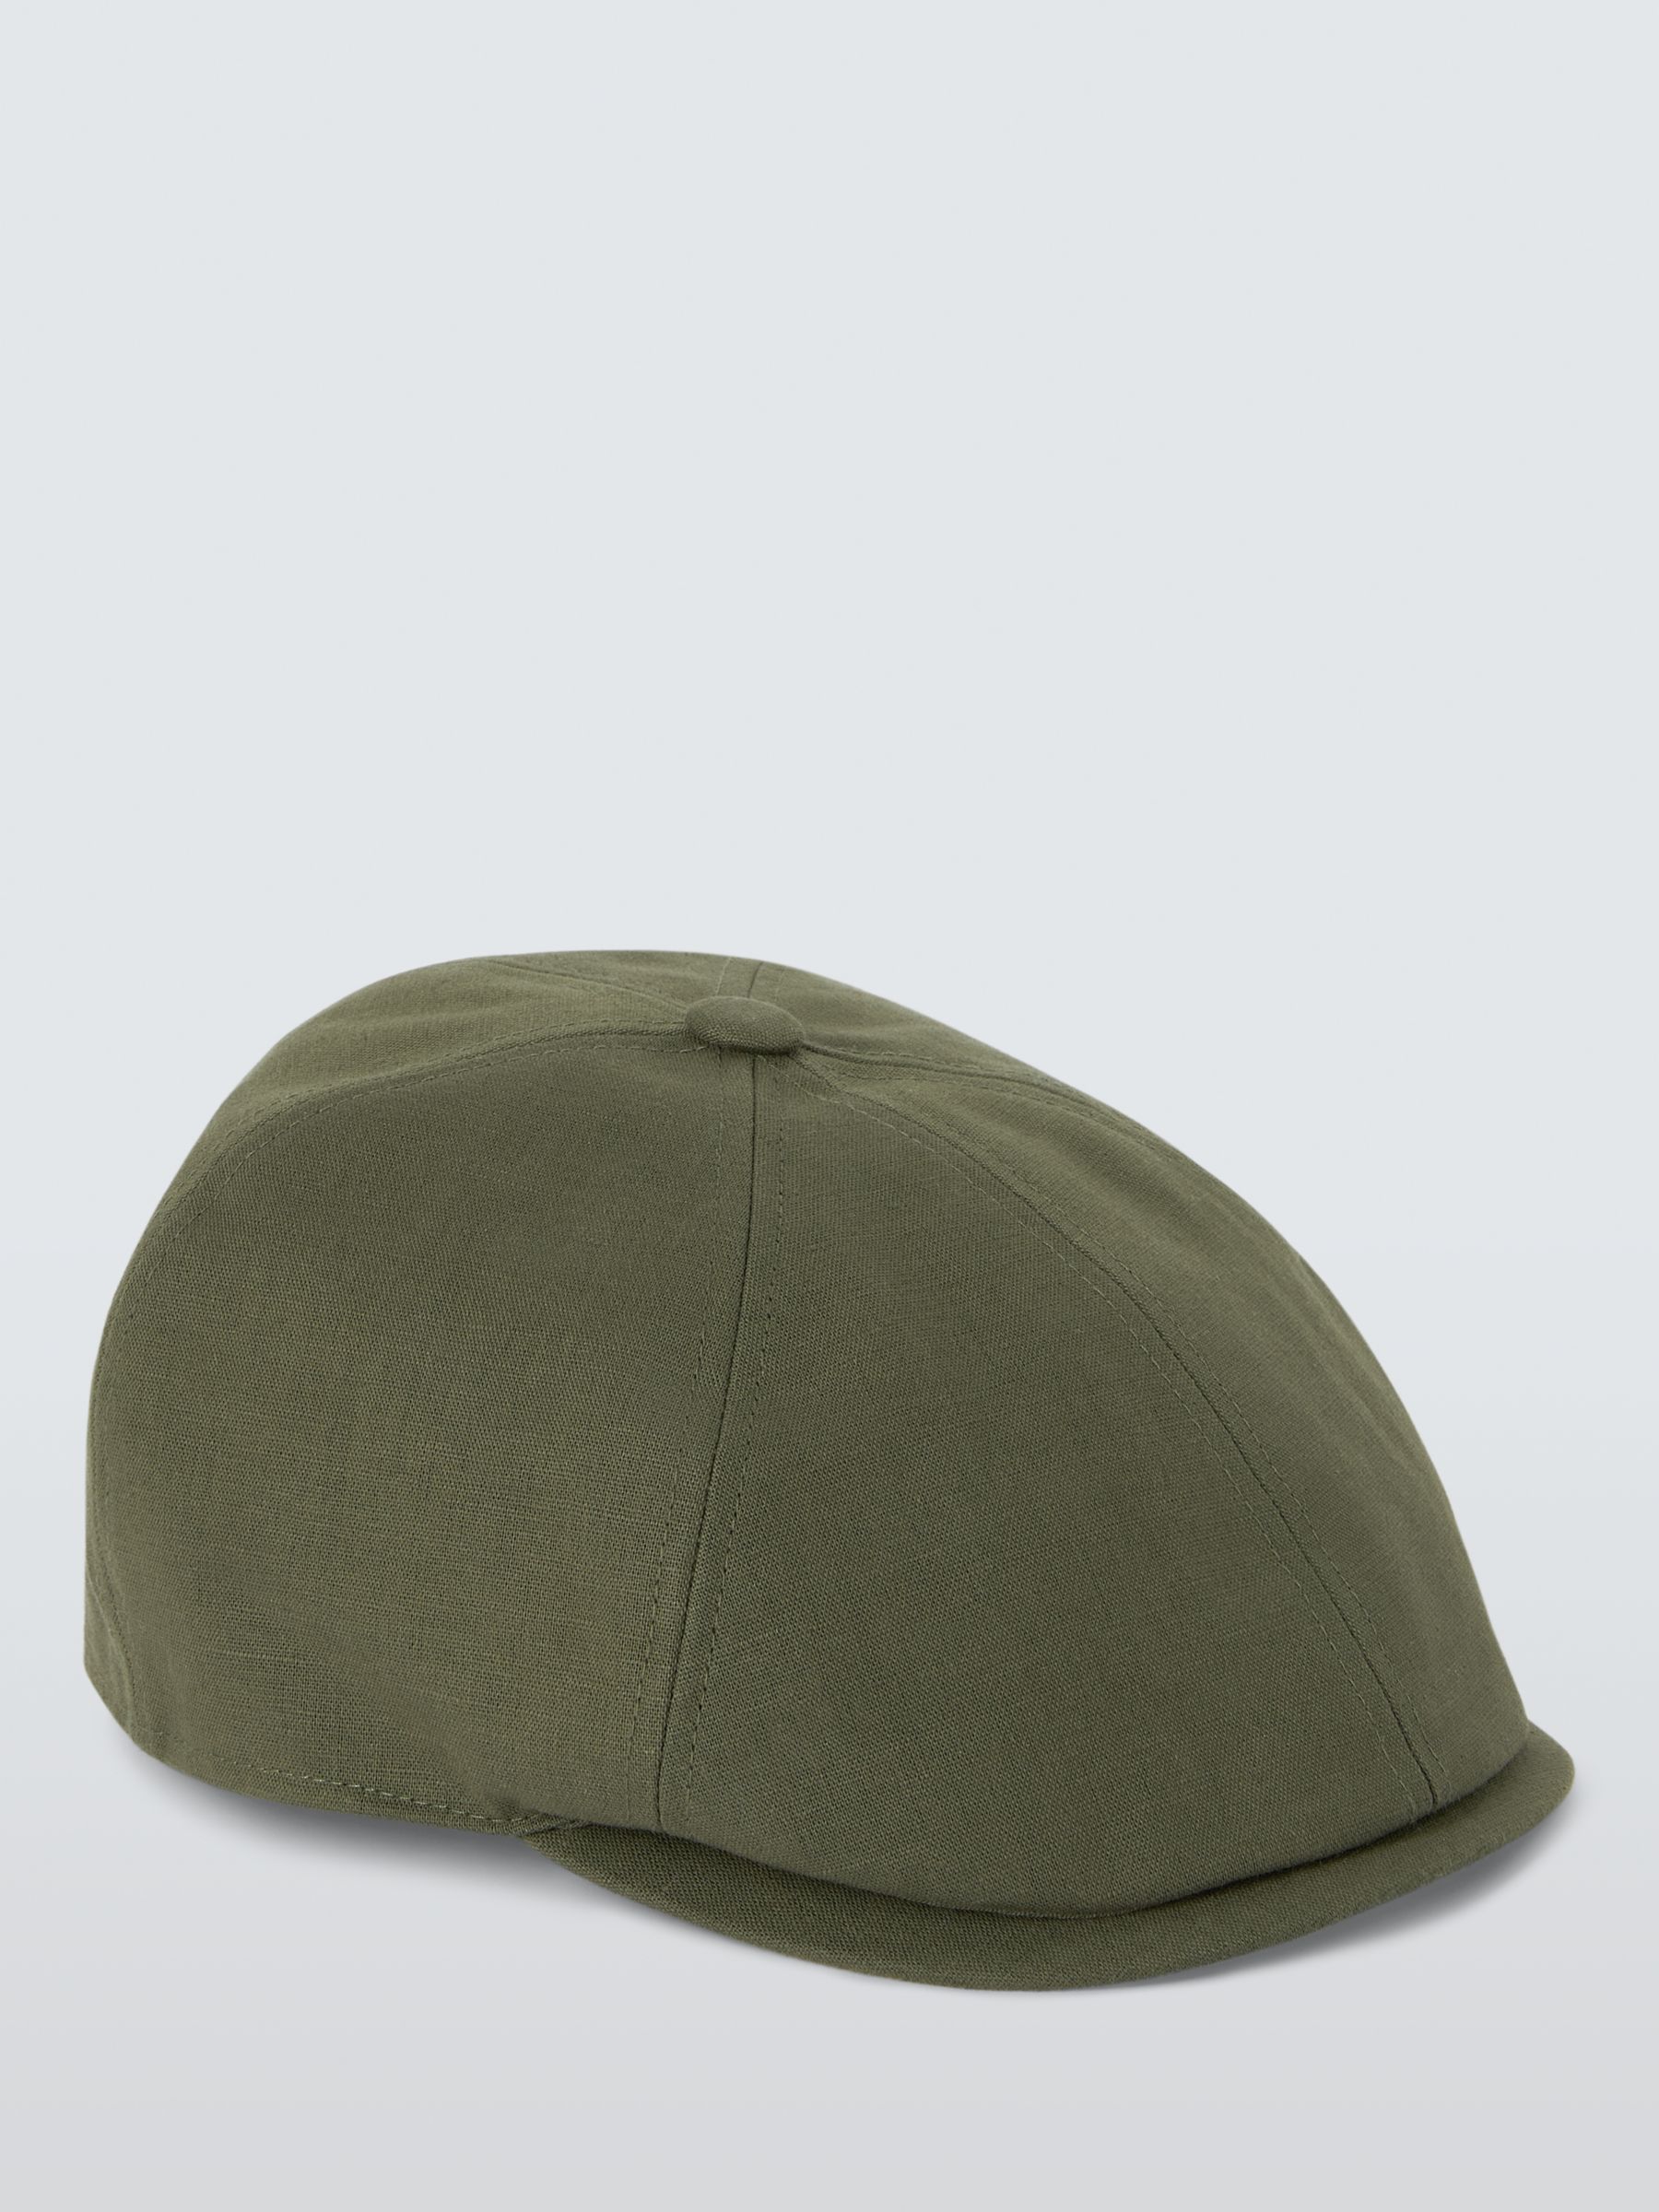 John Lewis Bakerboy Hat, Khaki, S-M